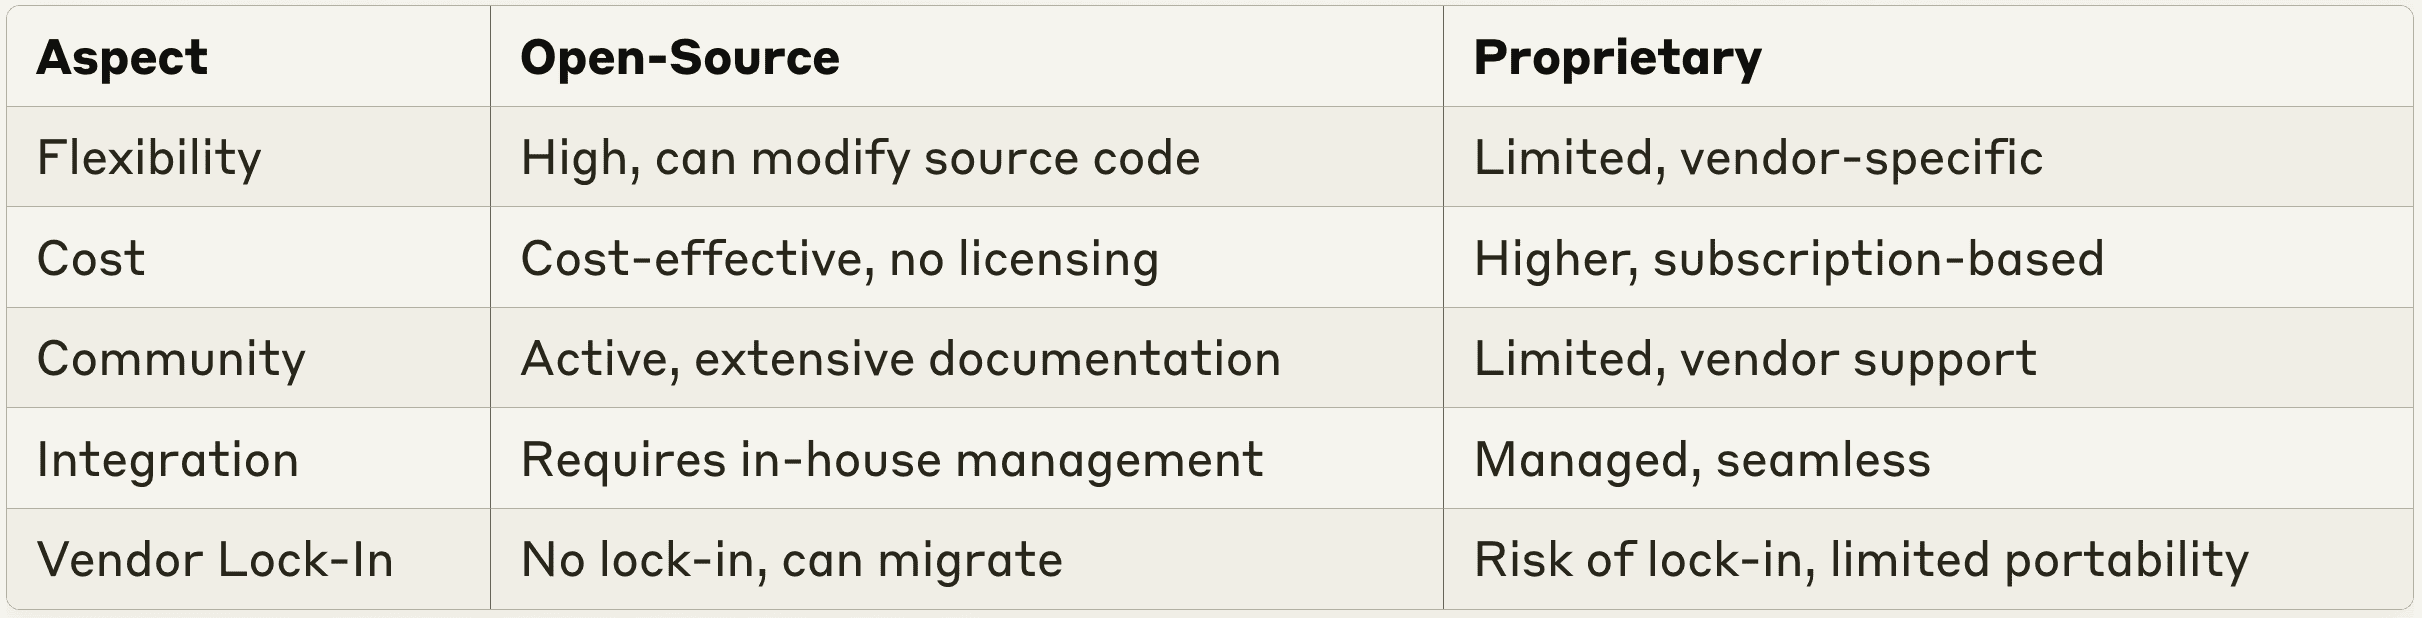 Database vettoriali open source e proprietari